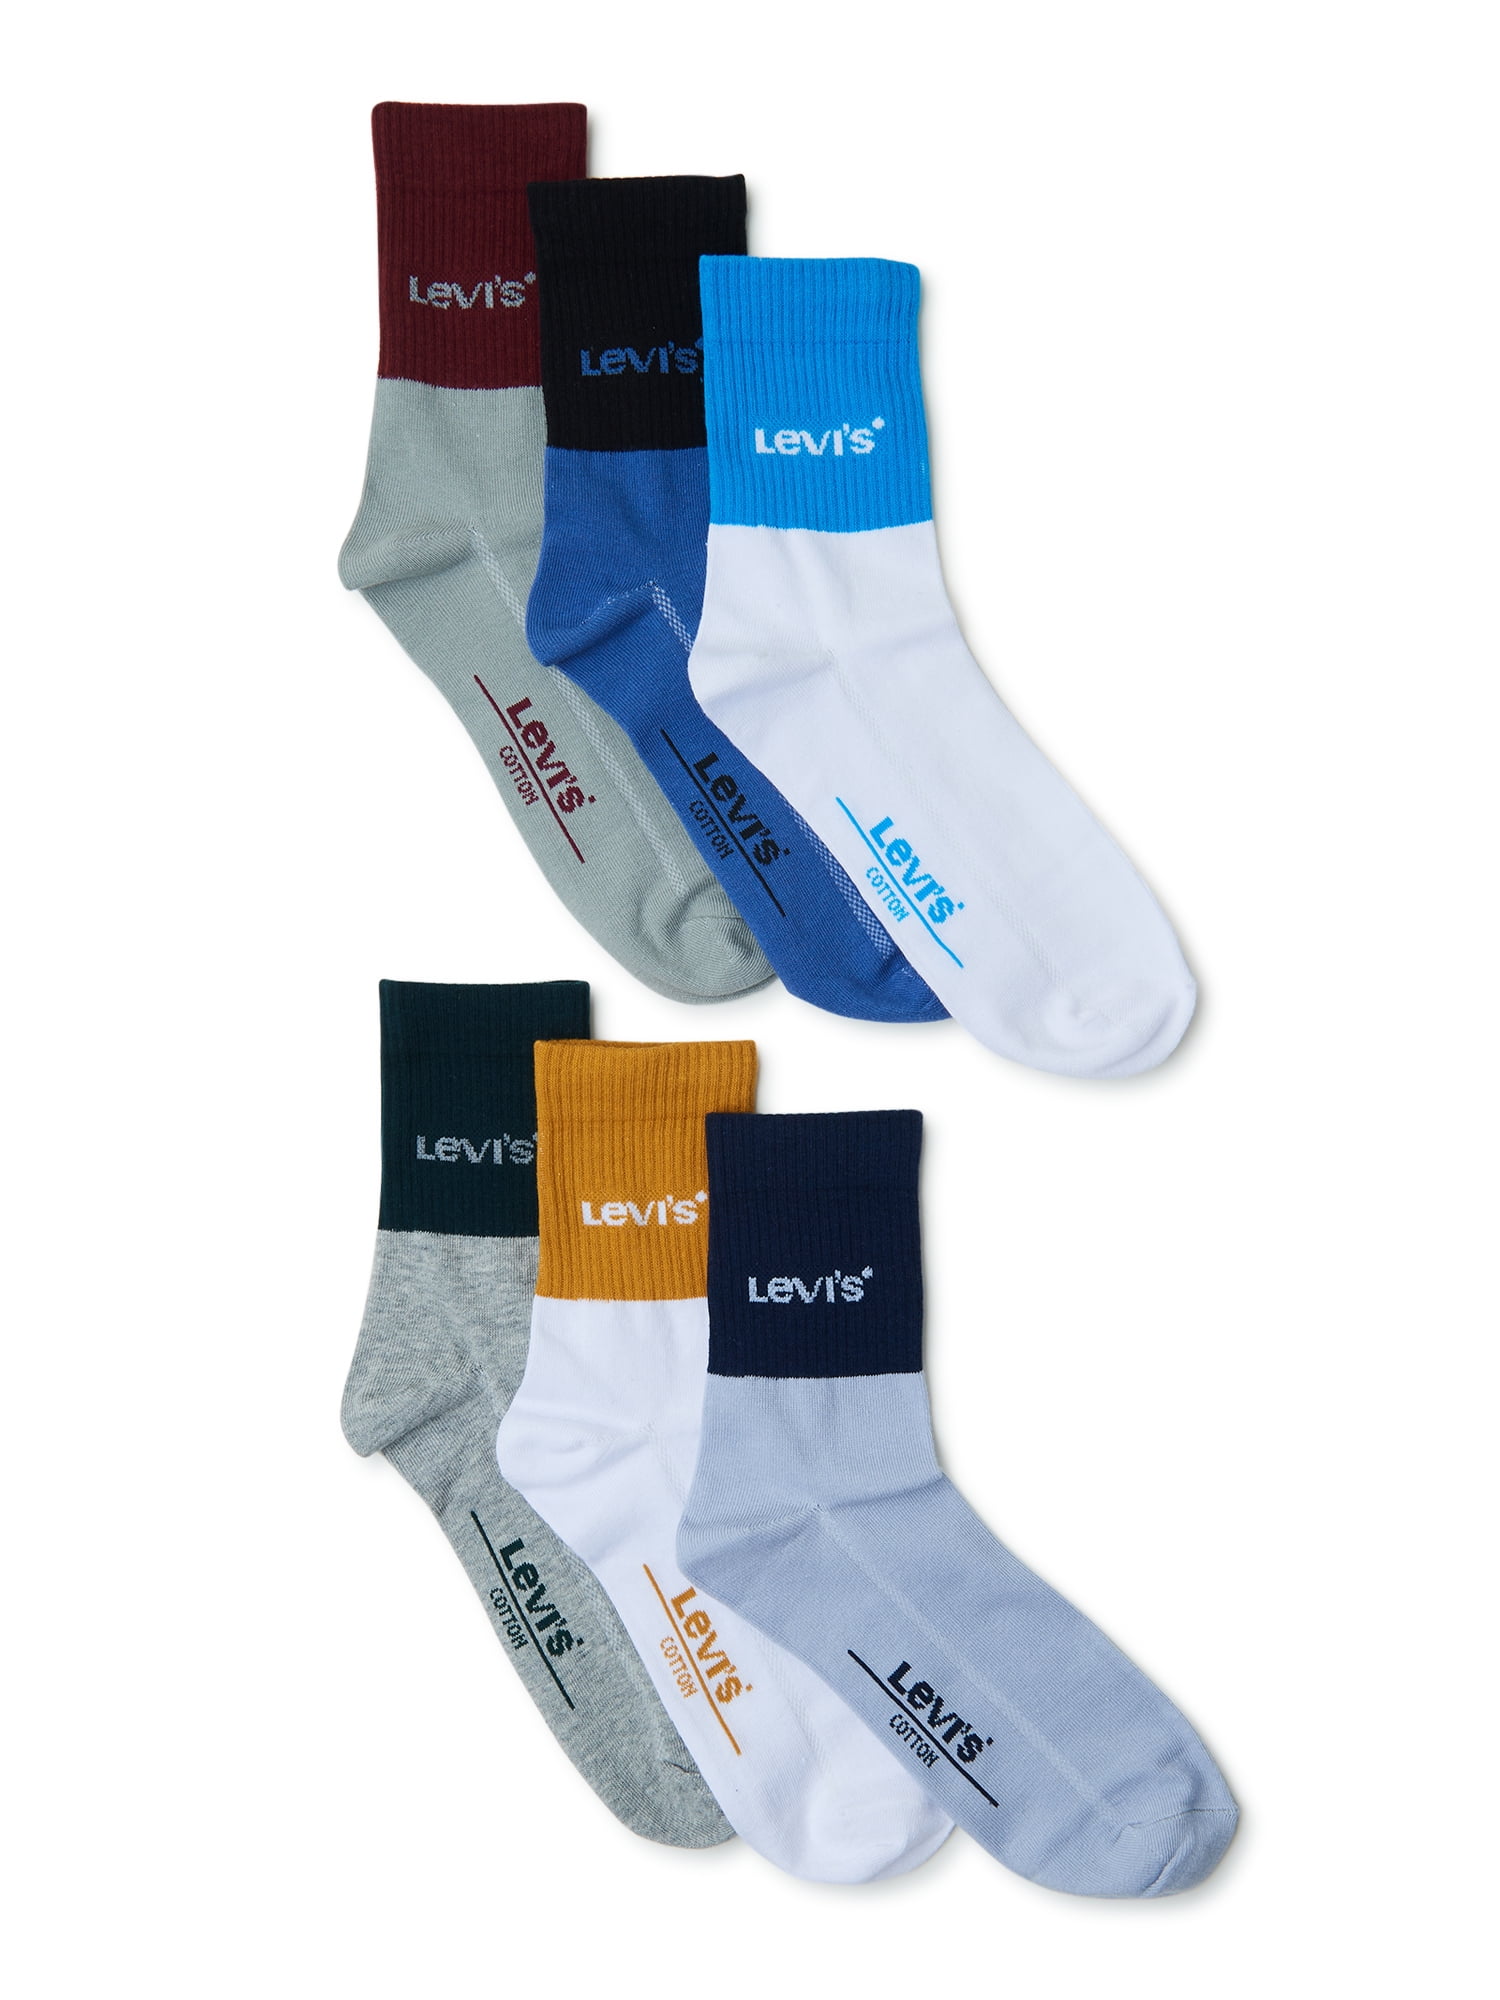 Levi’s Men’s Colorblocked Shorty Cut Socks, 6-Pack, Sizes 10-13 ...